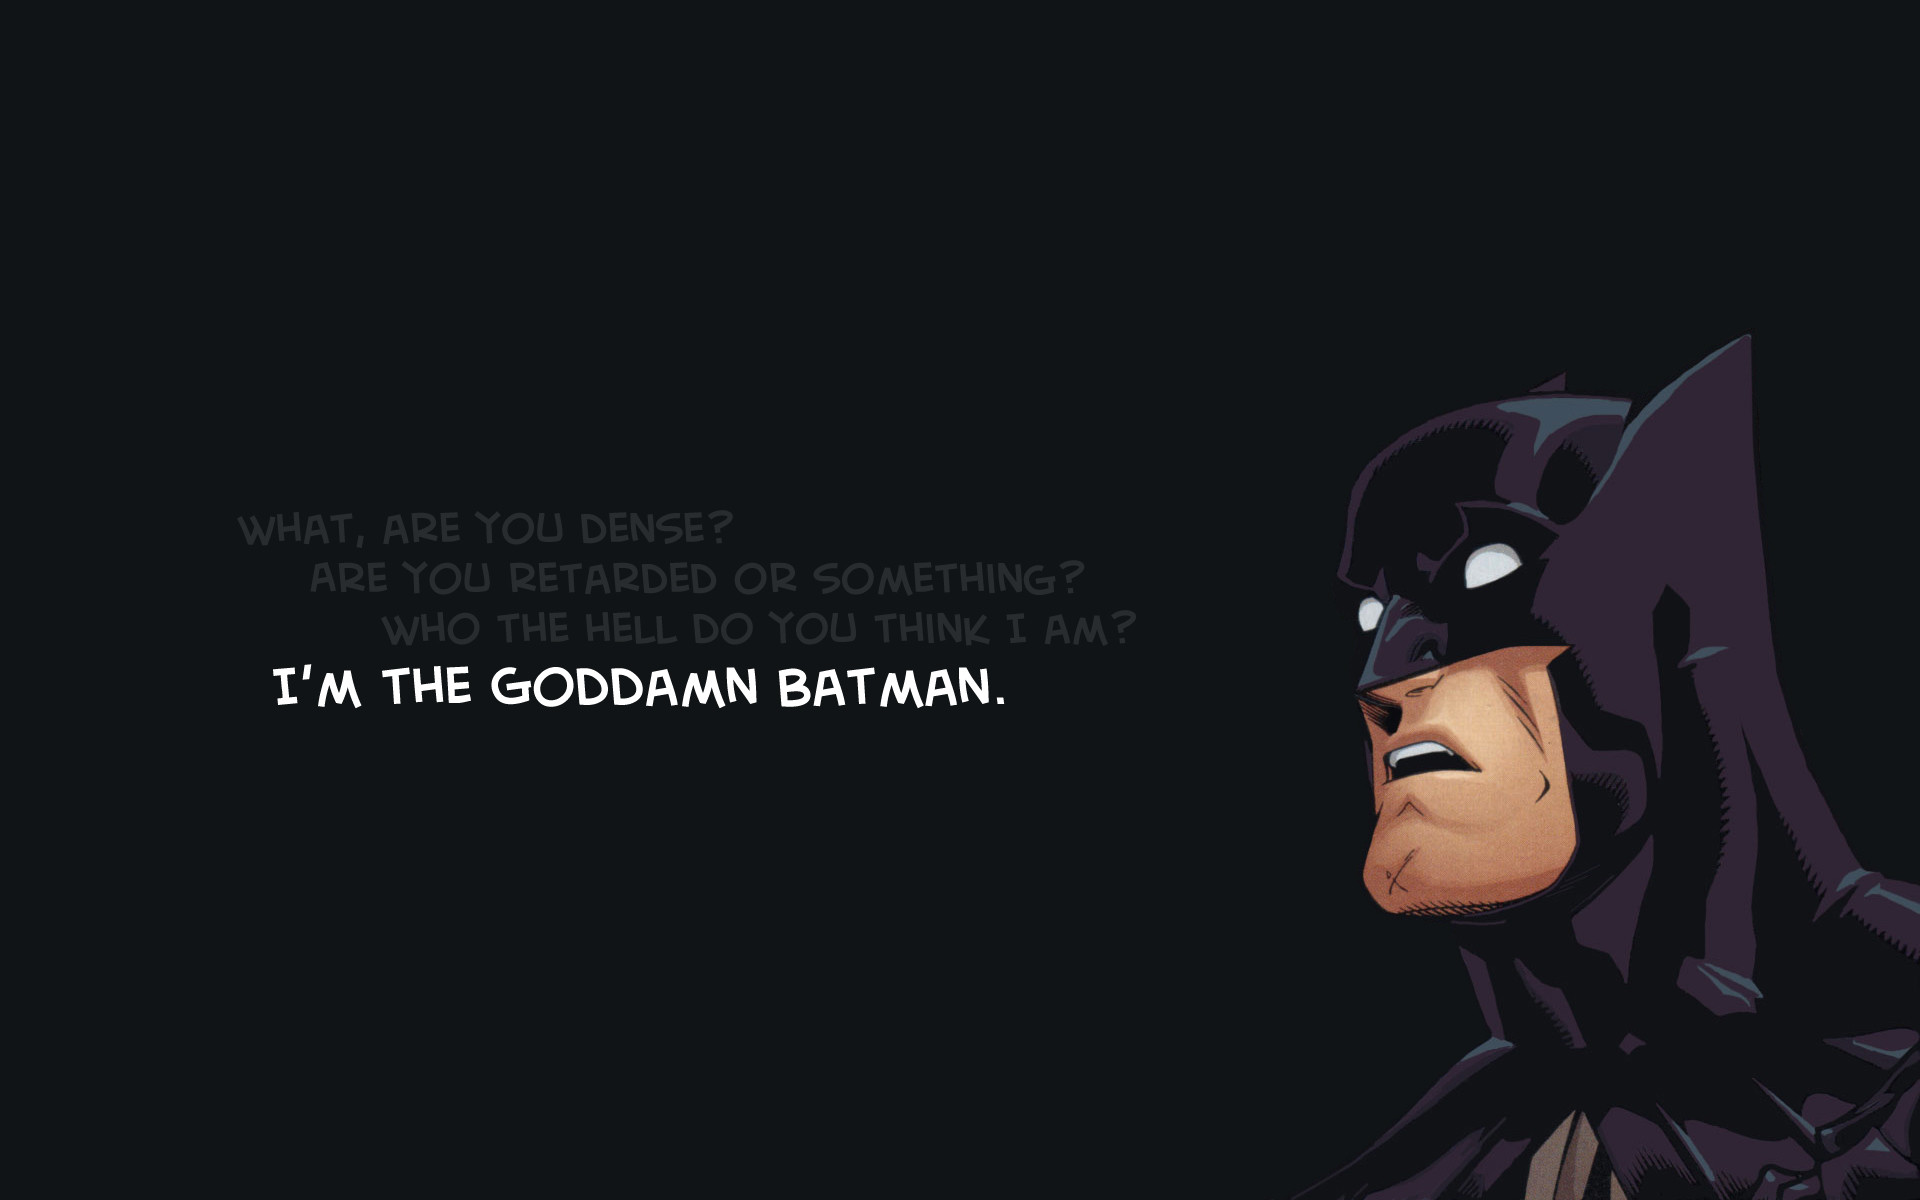 Descarga gratuita de fondo de pantalla para móvil de The Batman, Humor, Historietas.